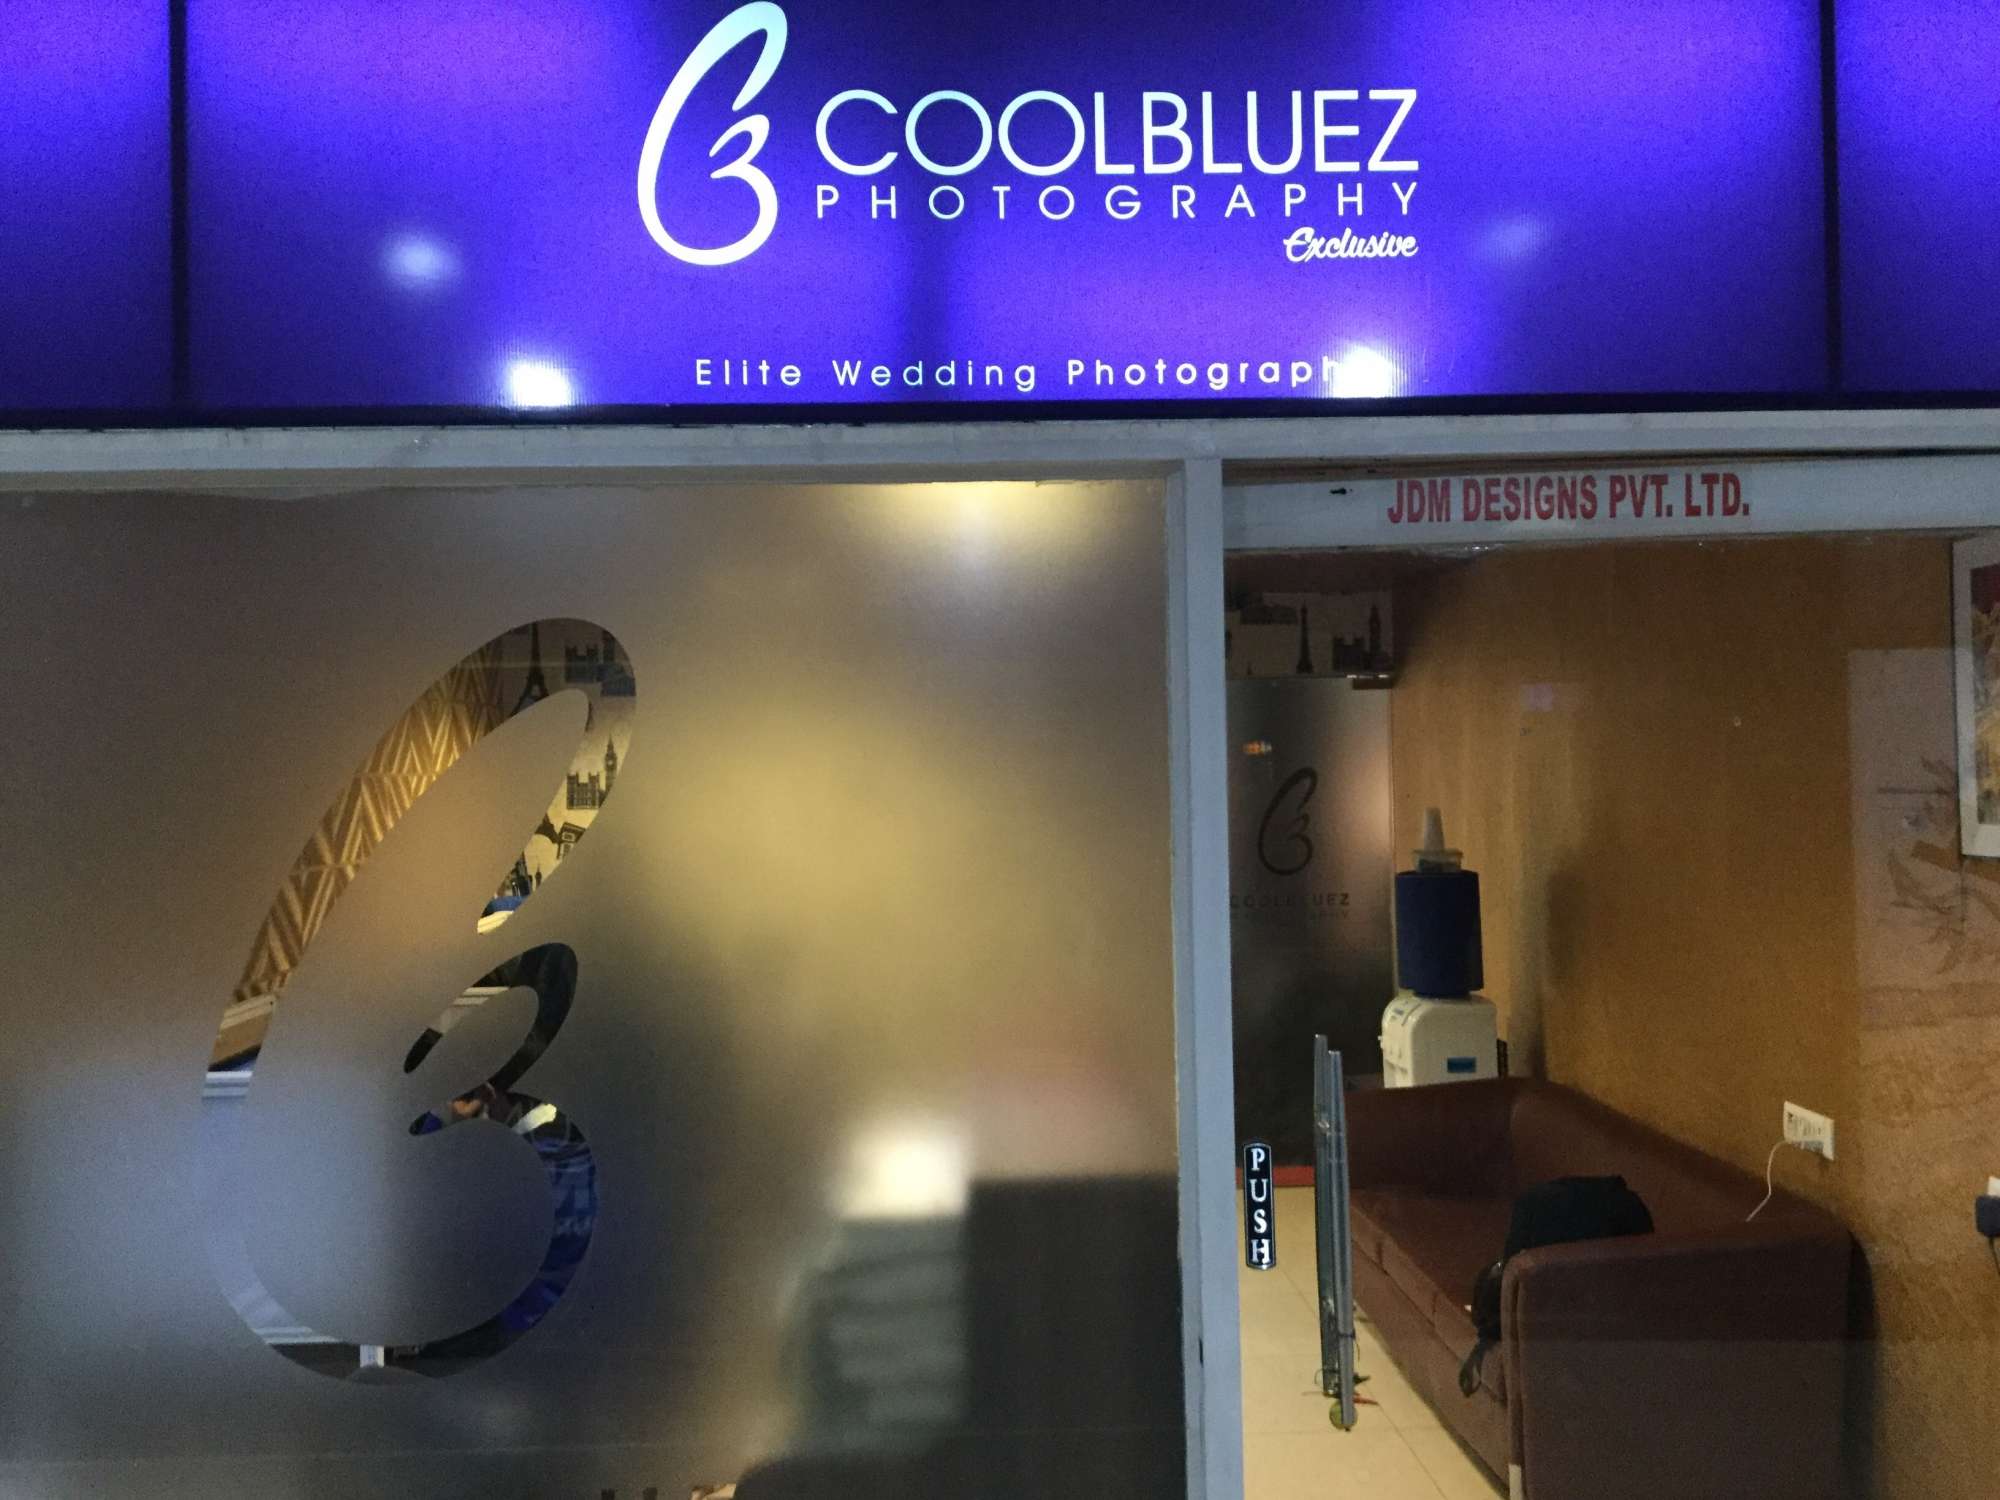 Cool Blue Z Logo - Coolbluez Photography Exclusive Photo, Sector Delhi- Picture